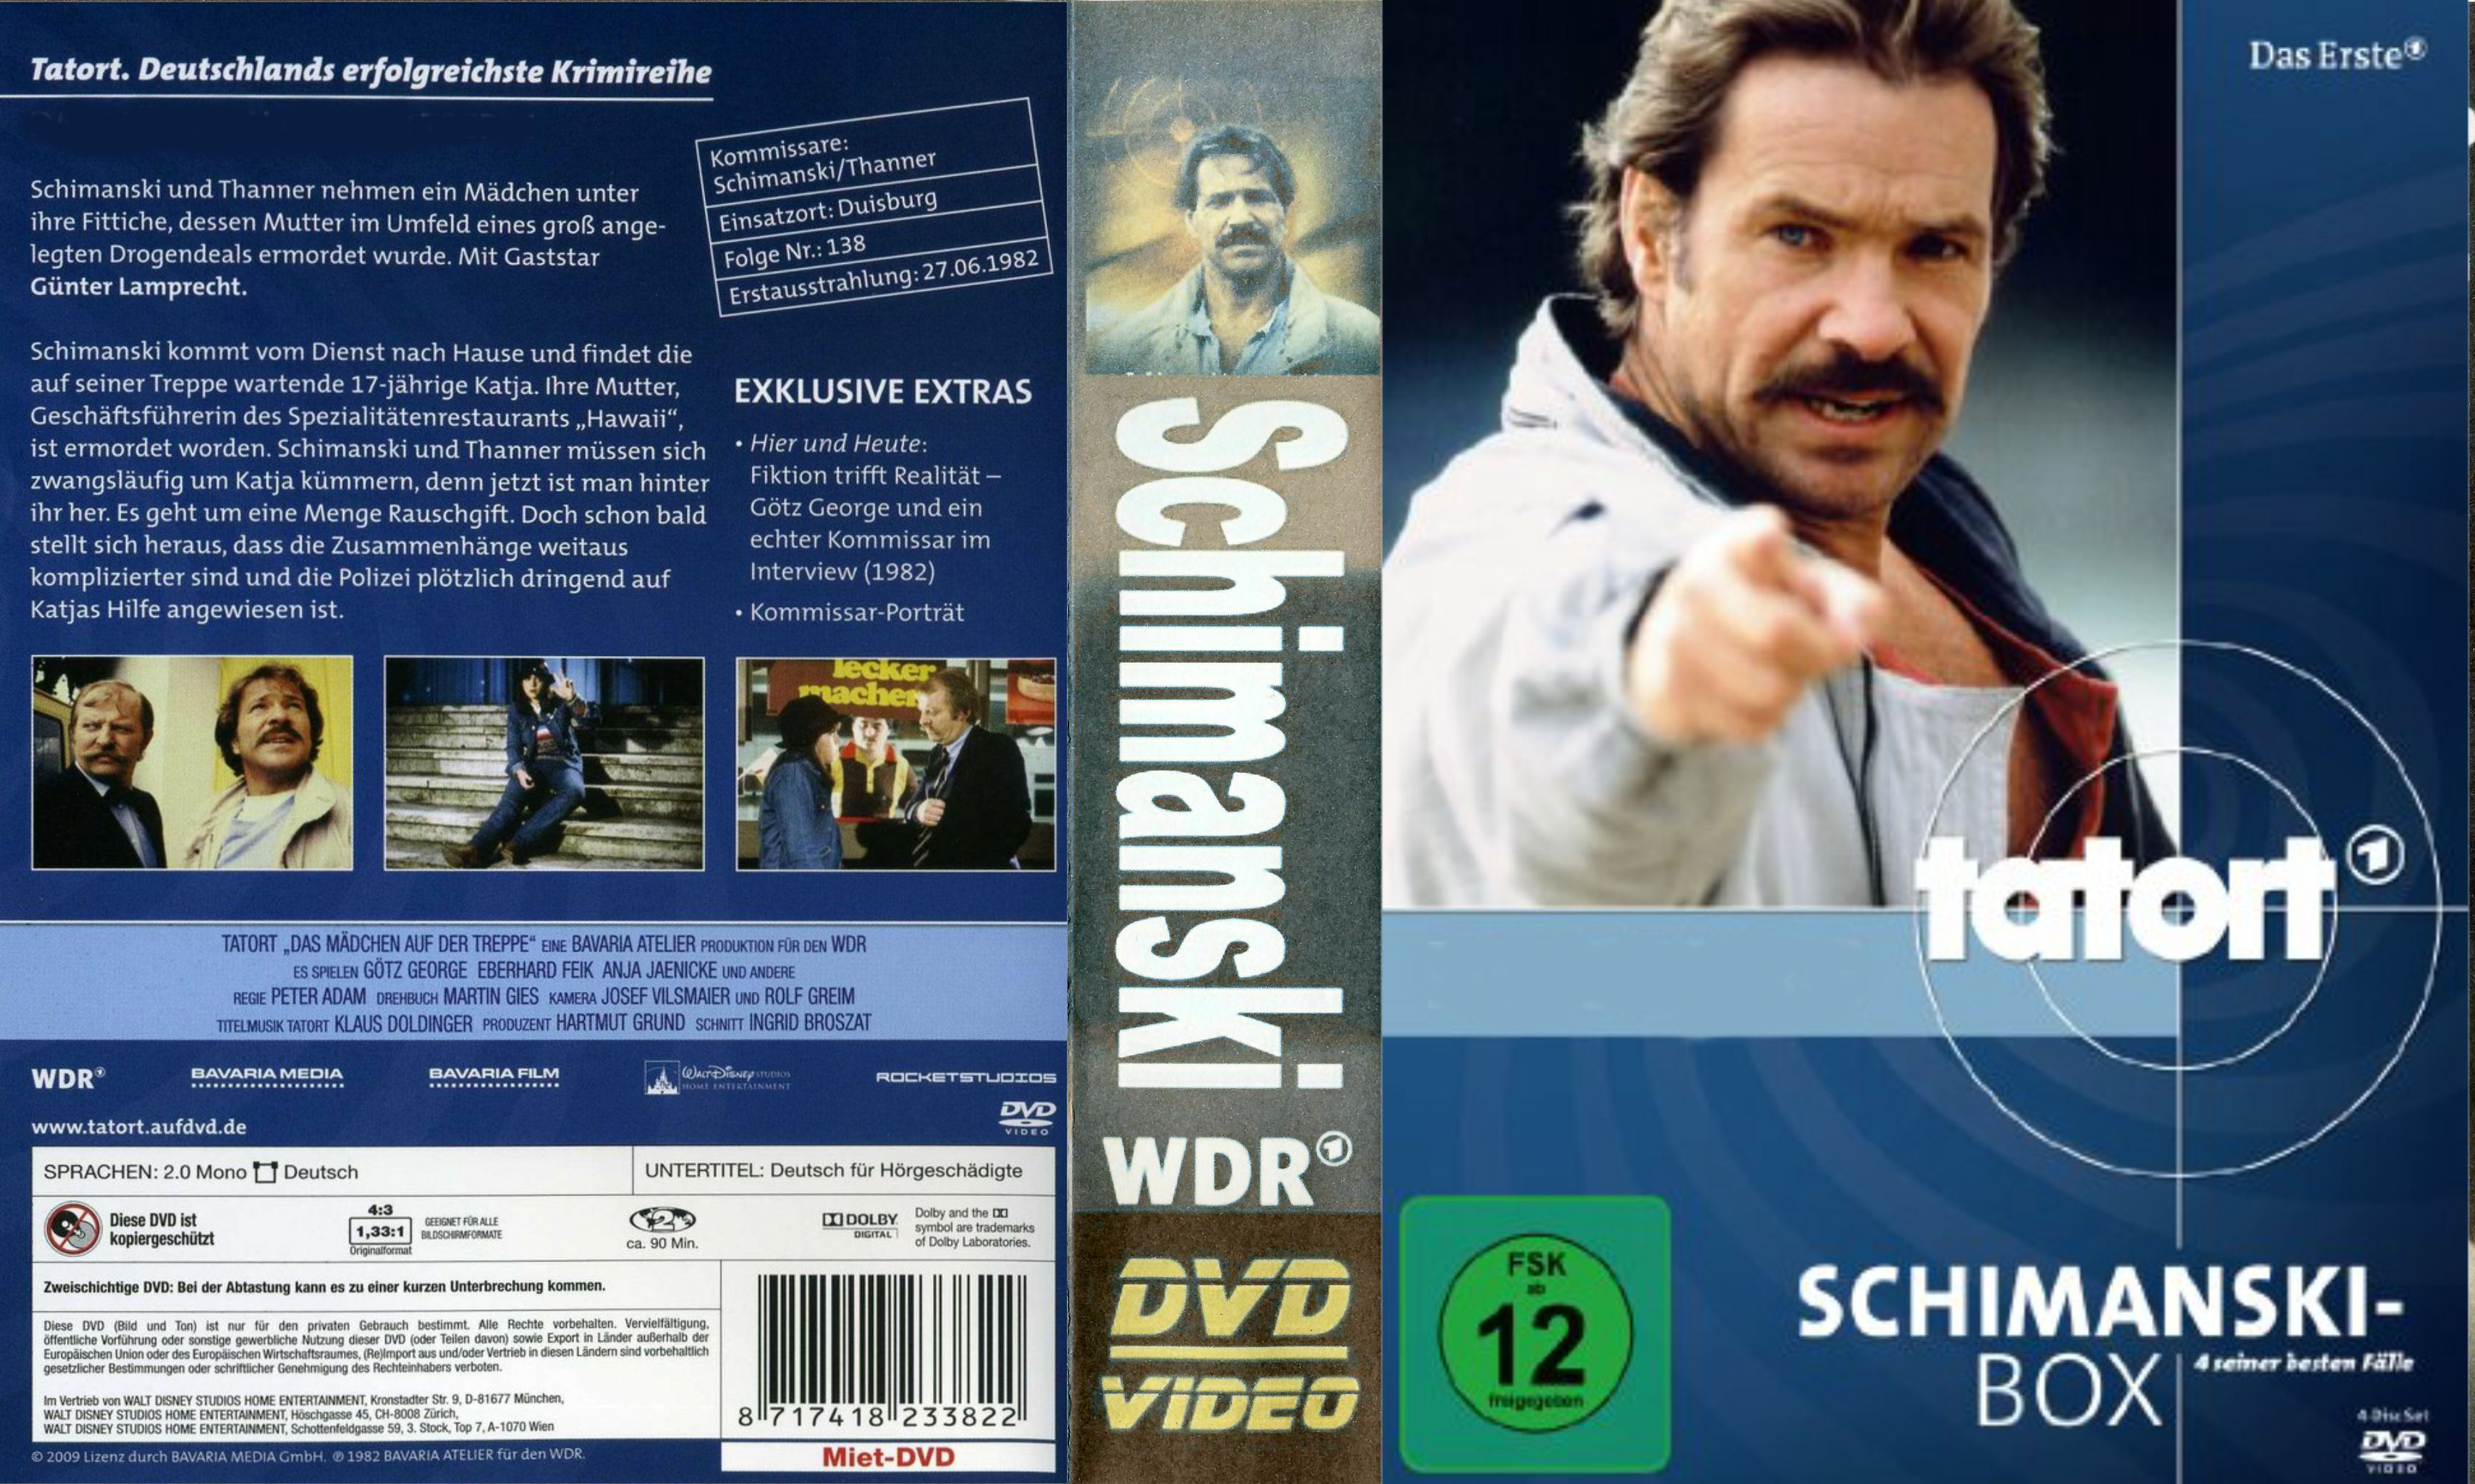 Schimanski Collectie Tatort No Subs - DvD 3